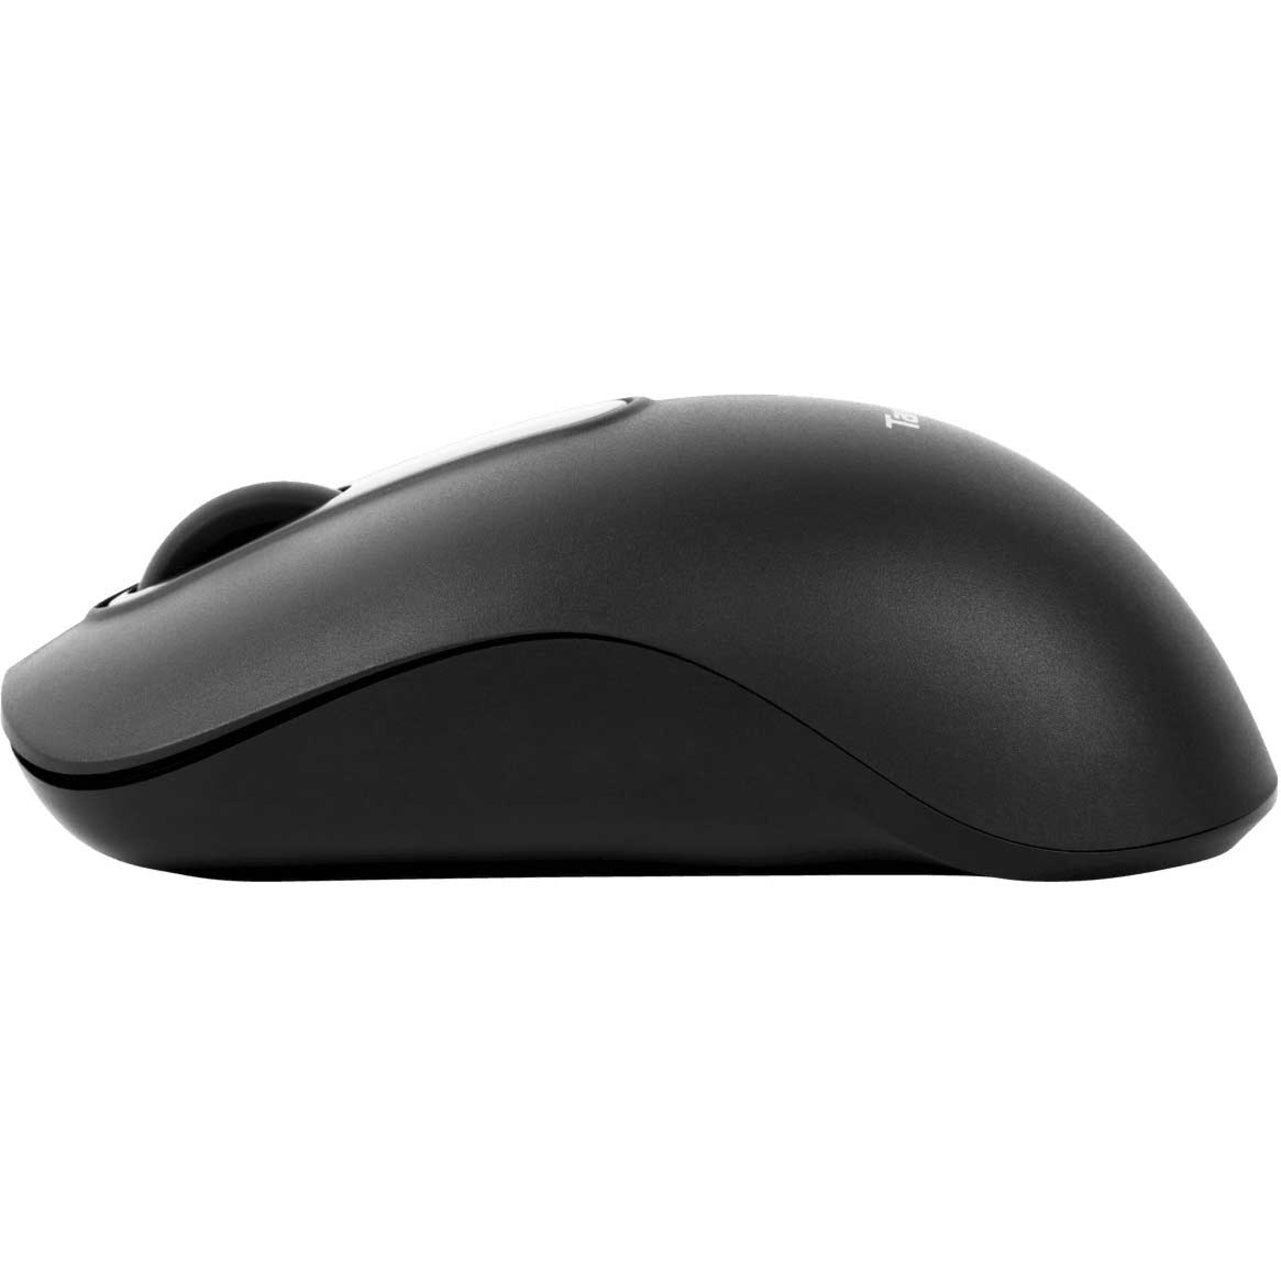 Targus B580 Bluetooth Mouse - Black [Discontinued]